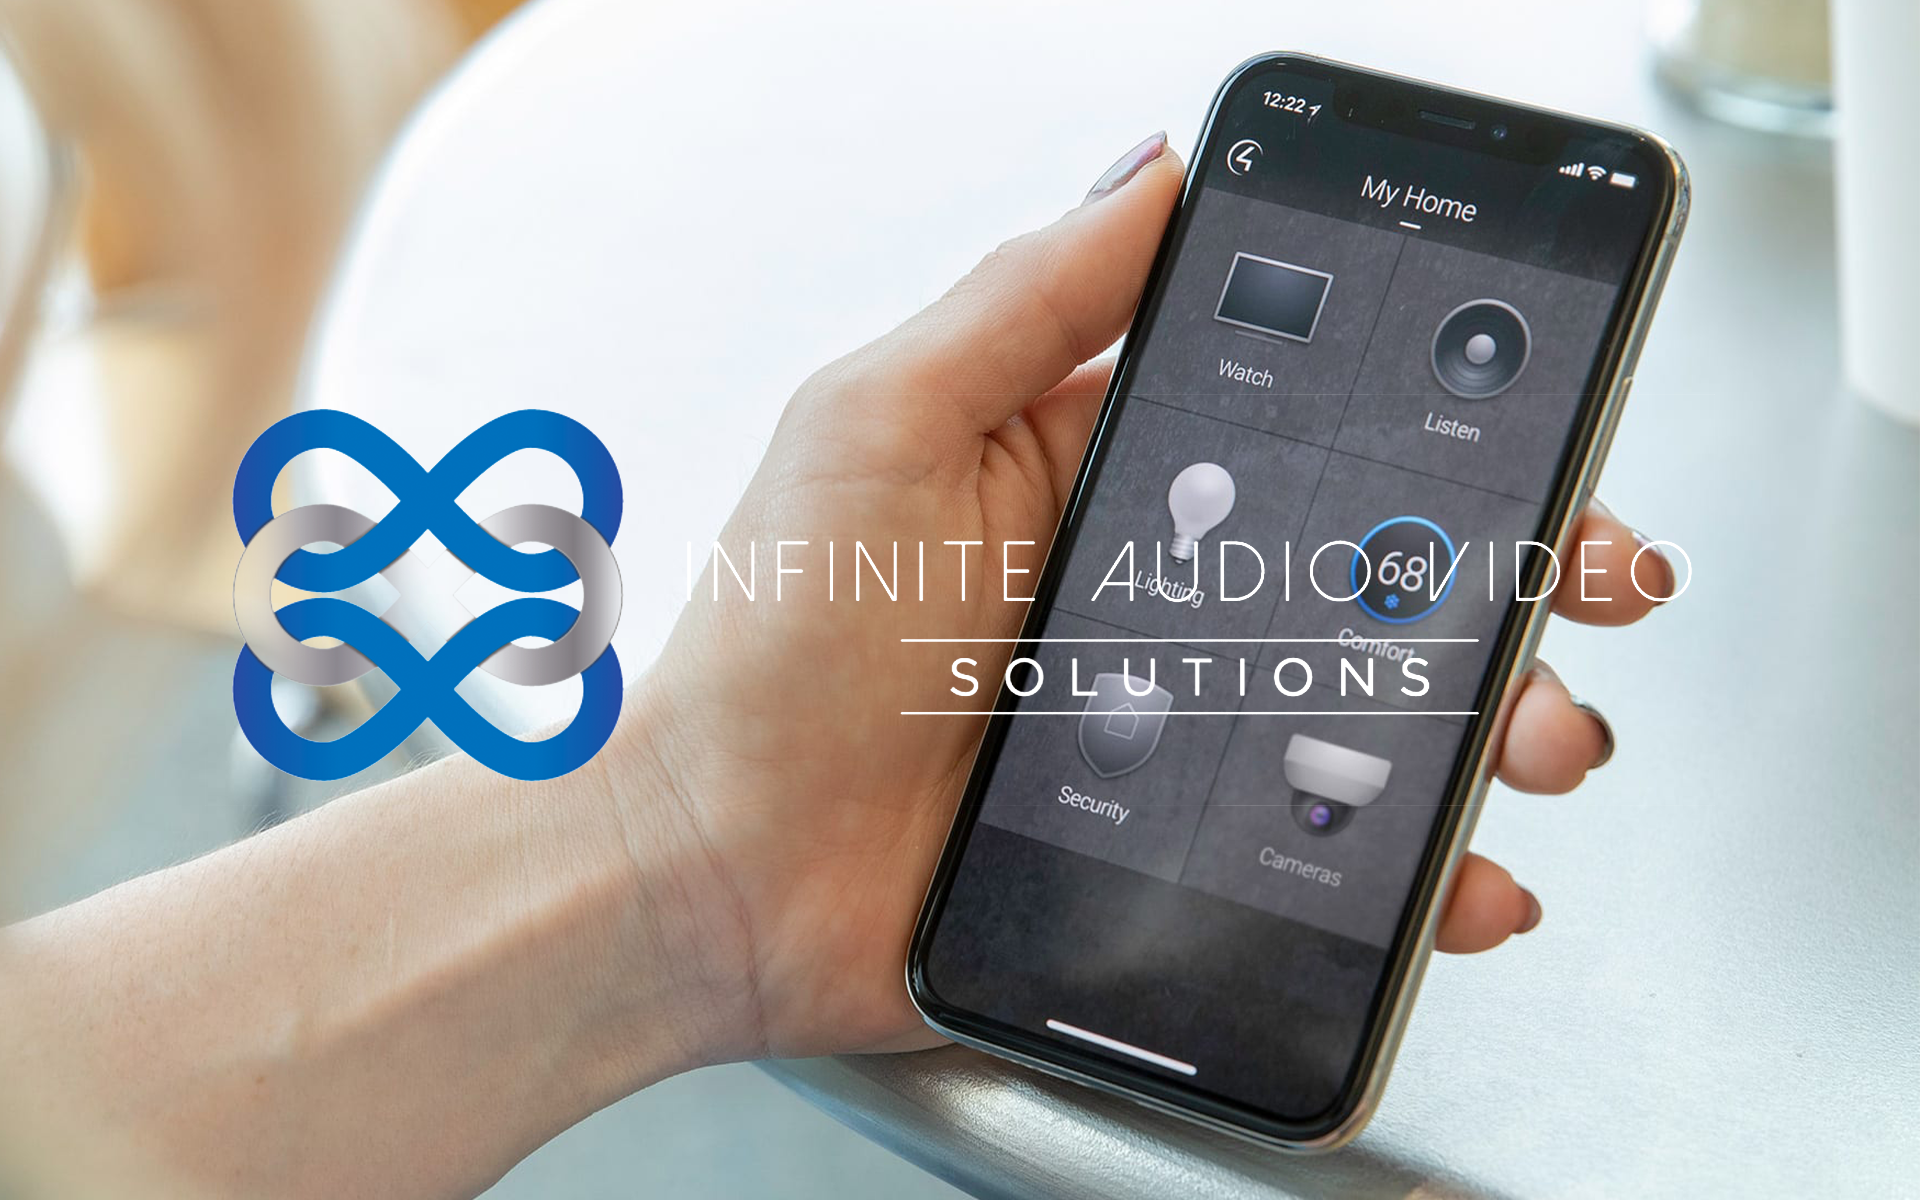 Infinite Audio Video Solutions